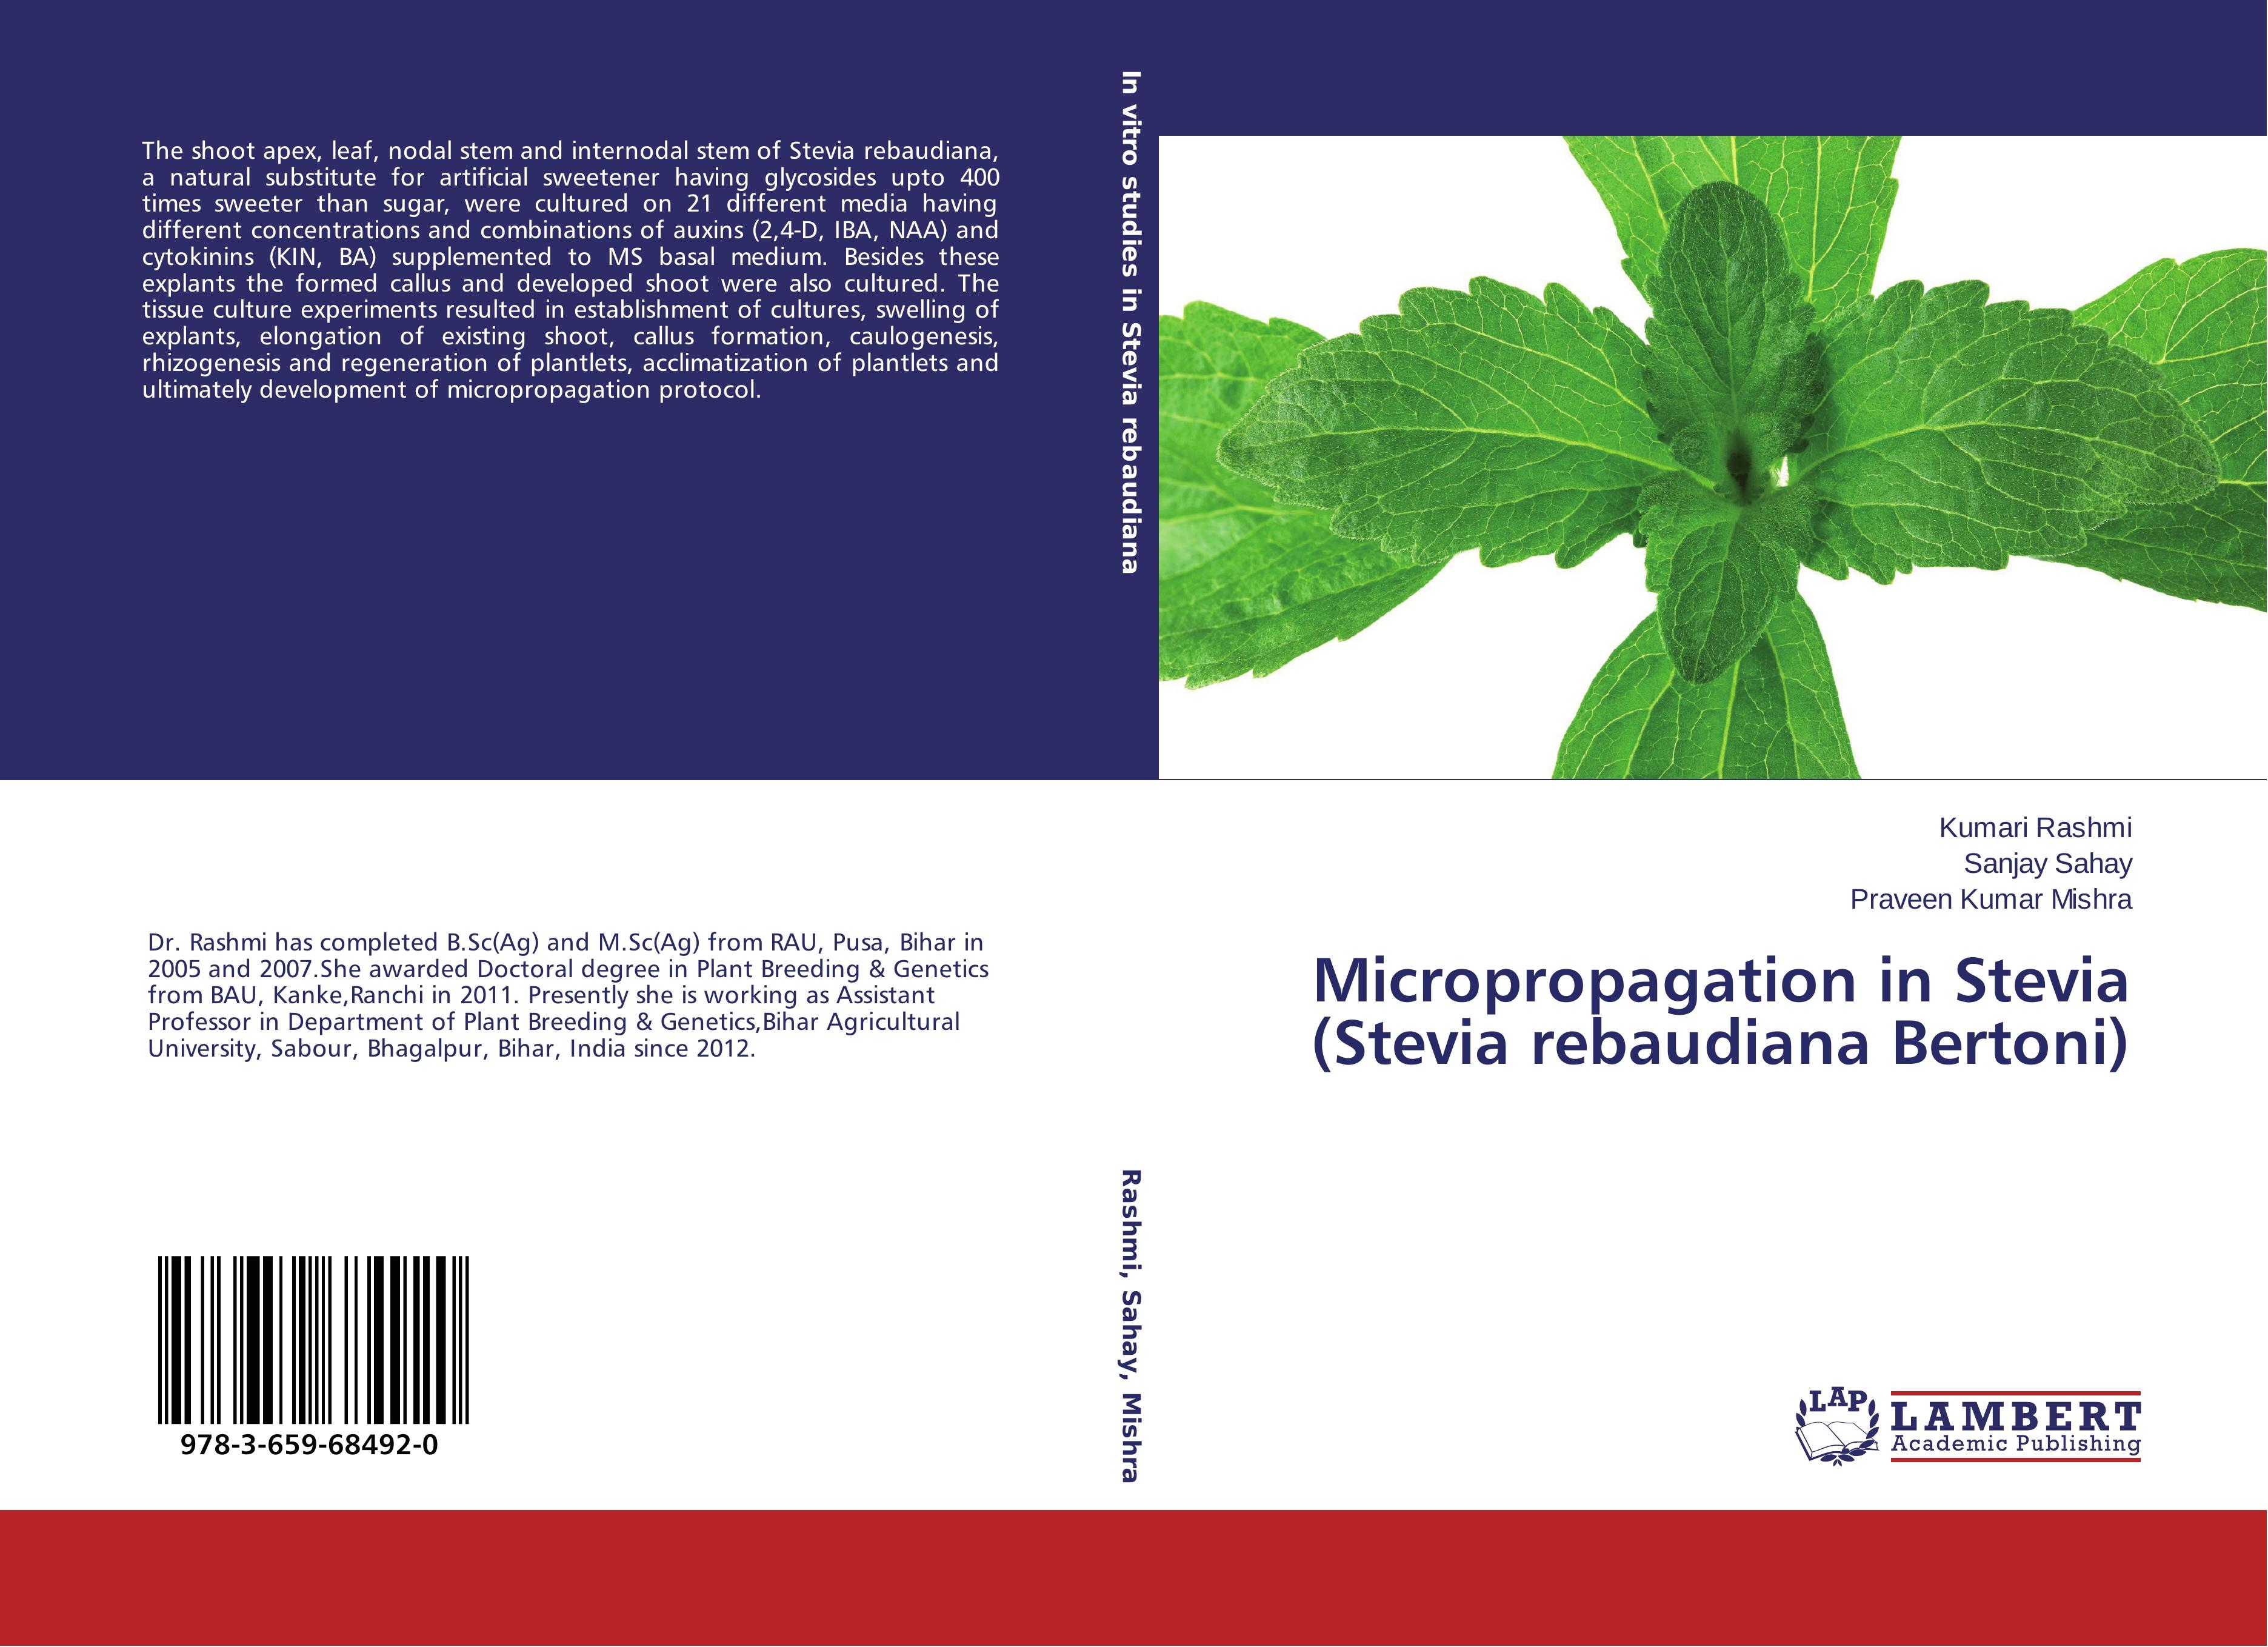 Micropropagation in Stevia (Stevia rebaudiana Bertoni) - Kumari Rashmi Sanjay Sahay Praveen Kumar Mishra